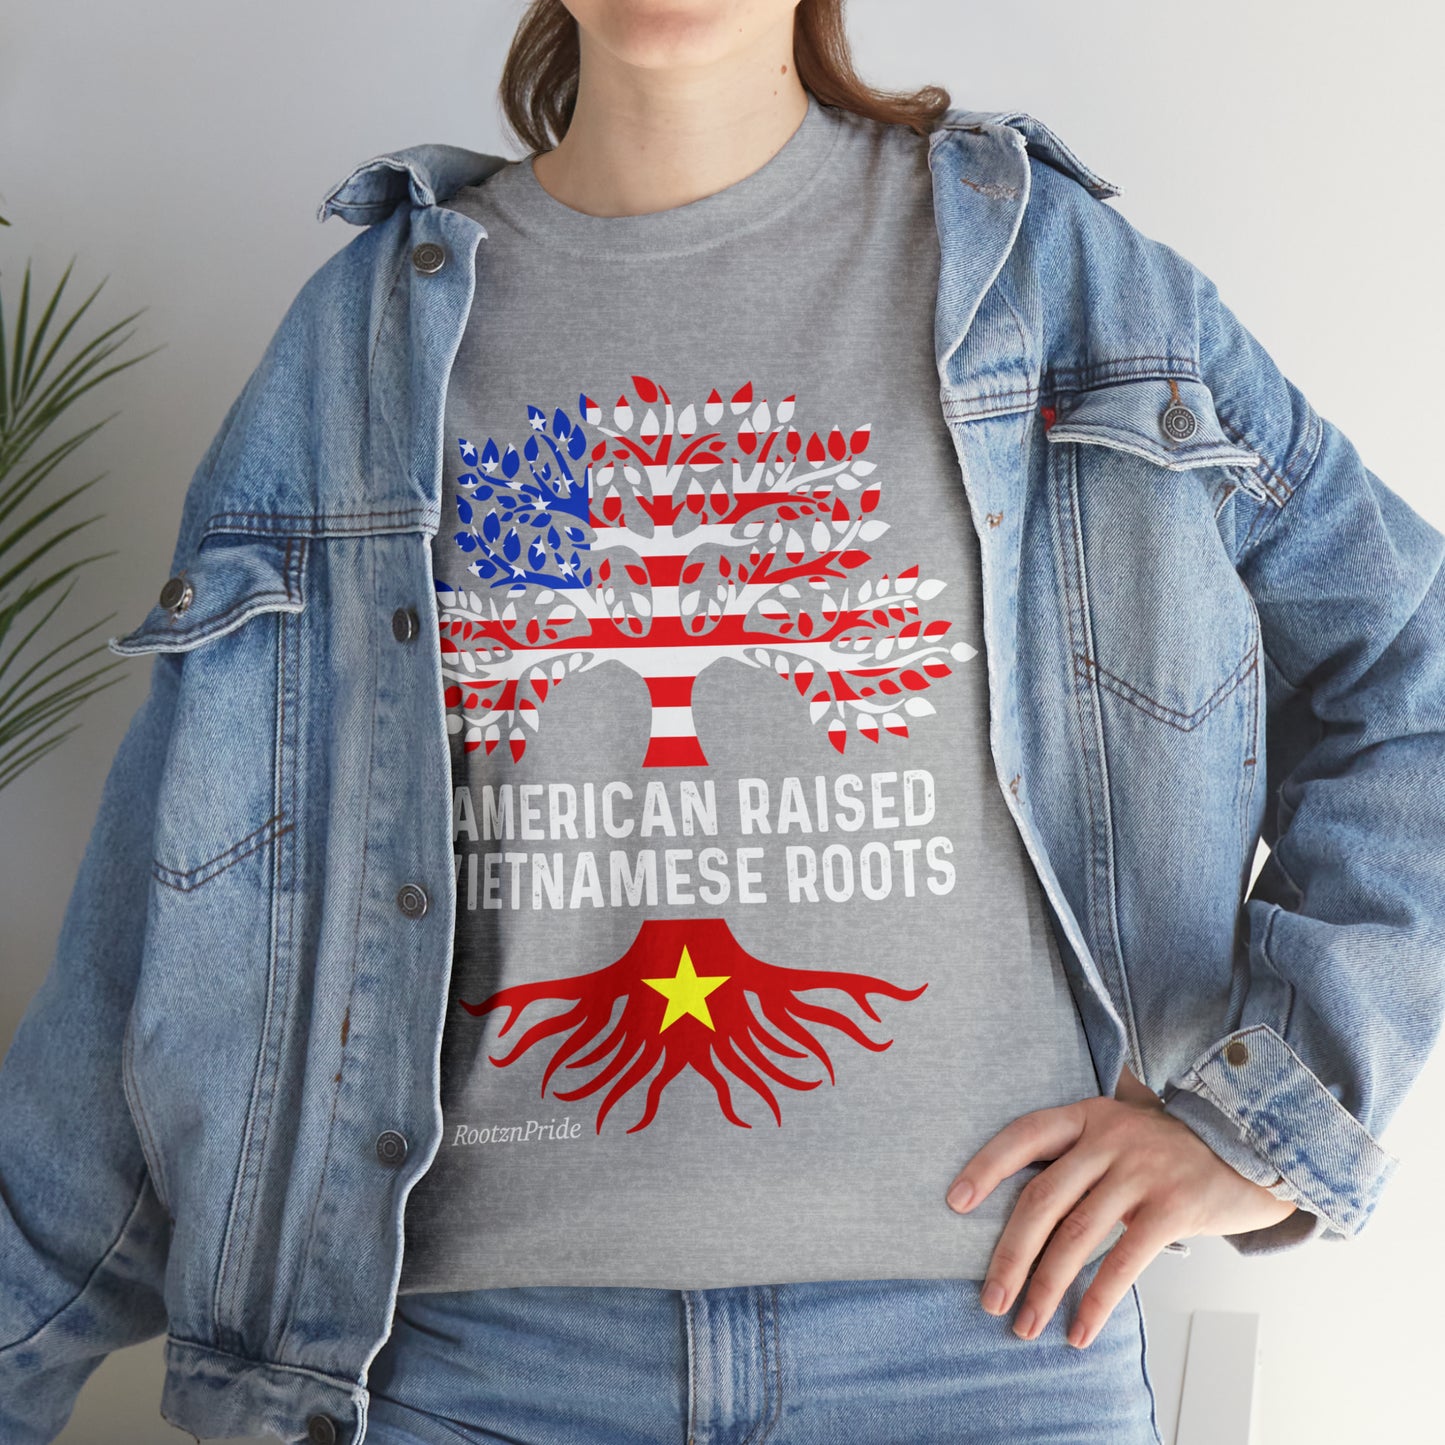 Vietnamese Roots Design 4: Adult T-Shirt